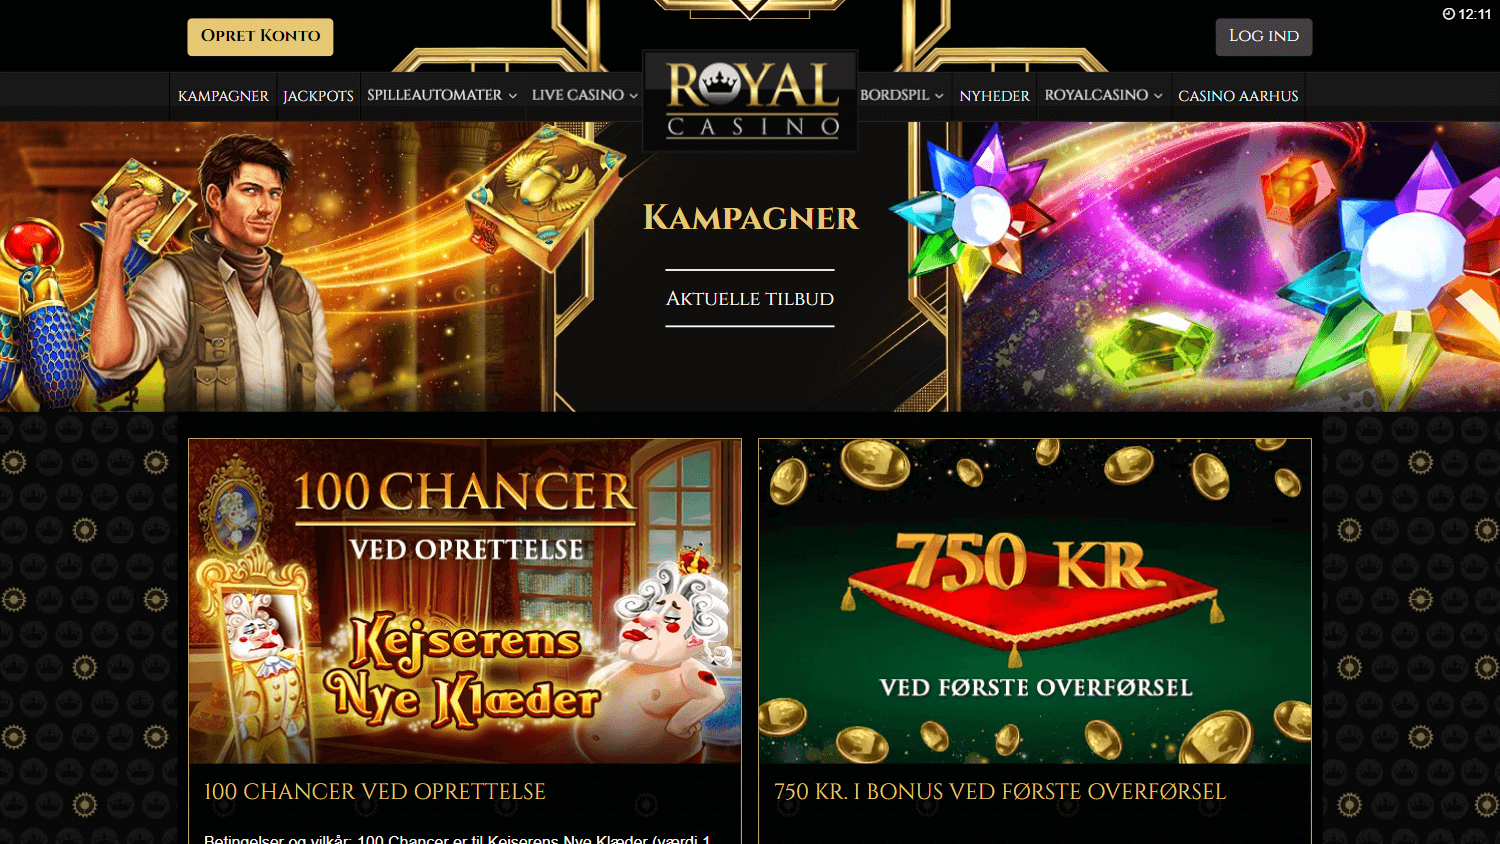 royal_casino_dk_promotions_desktop